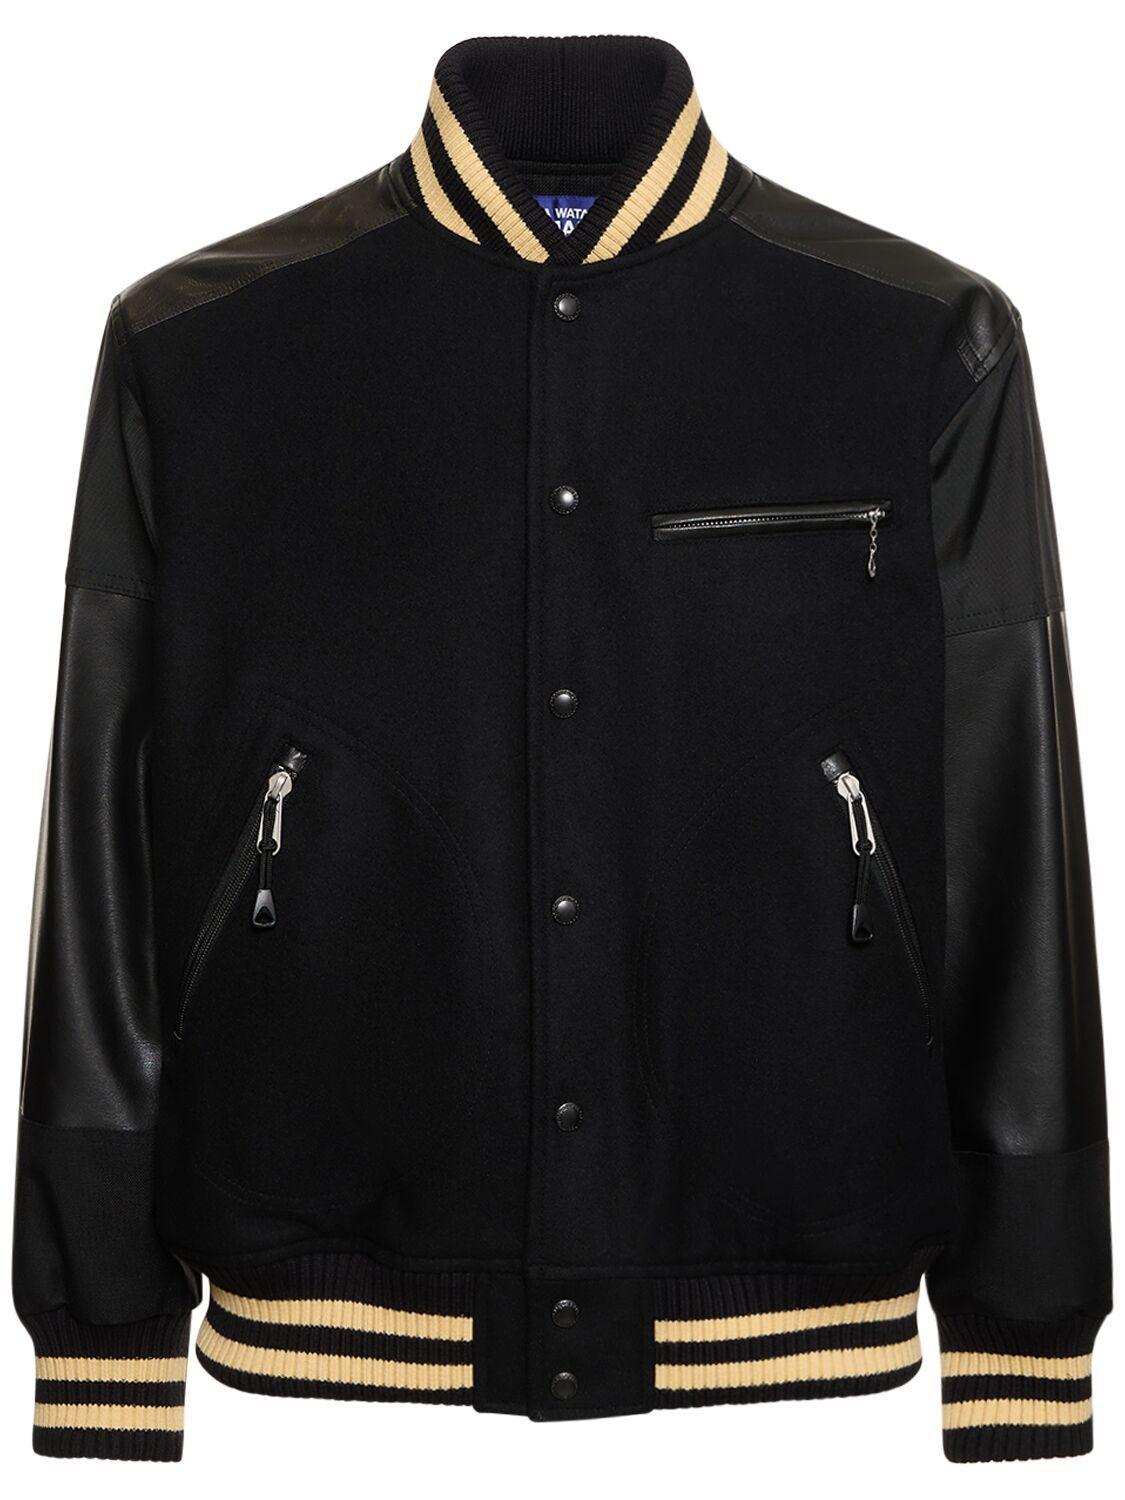 Junya Watanabe Wool & Nylon Melton Bomber Jacket in Black for Men